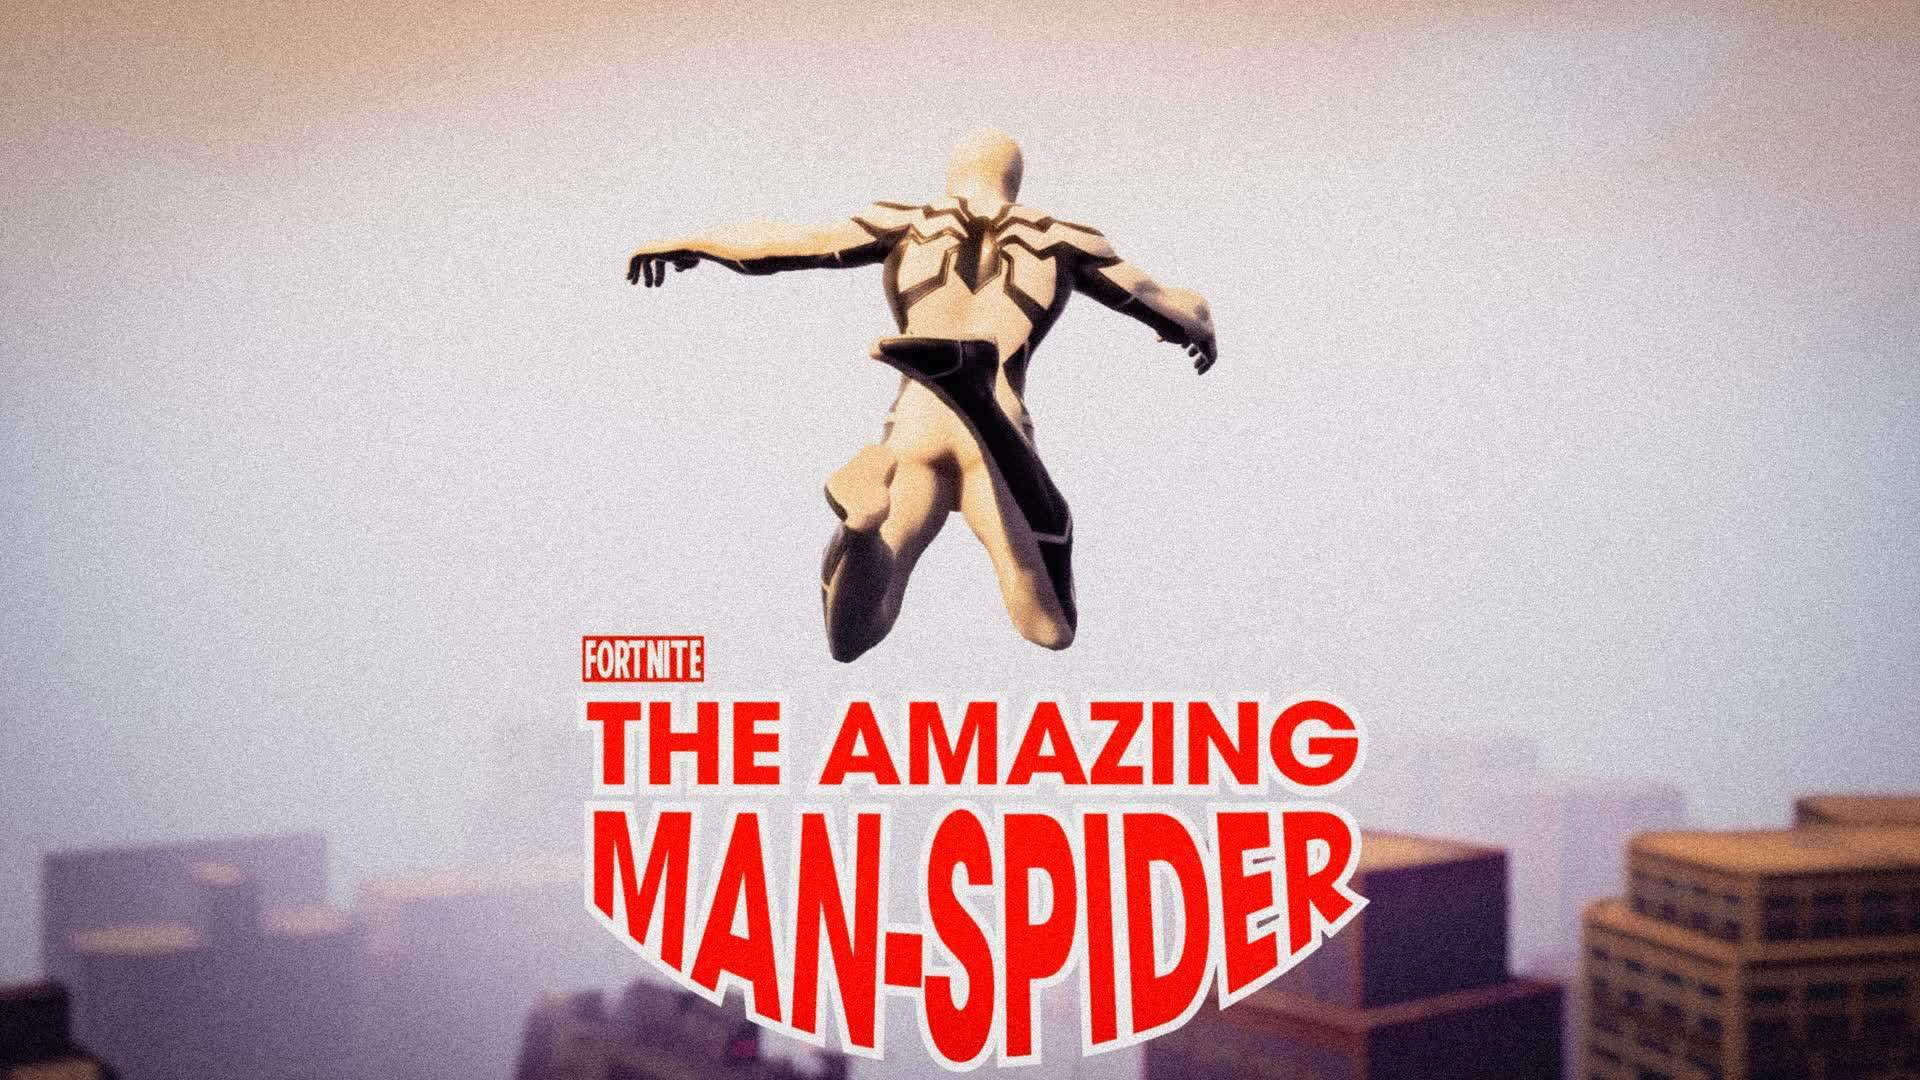 THE AMAZING MAN-SPIDER